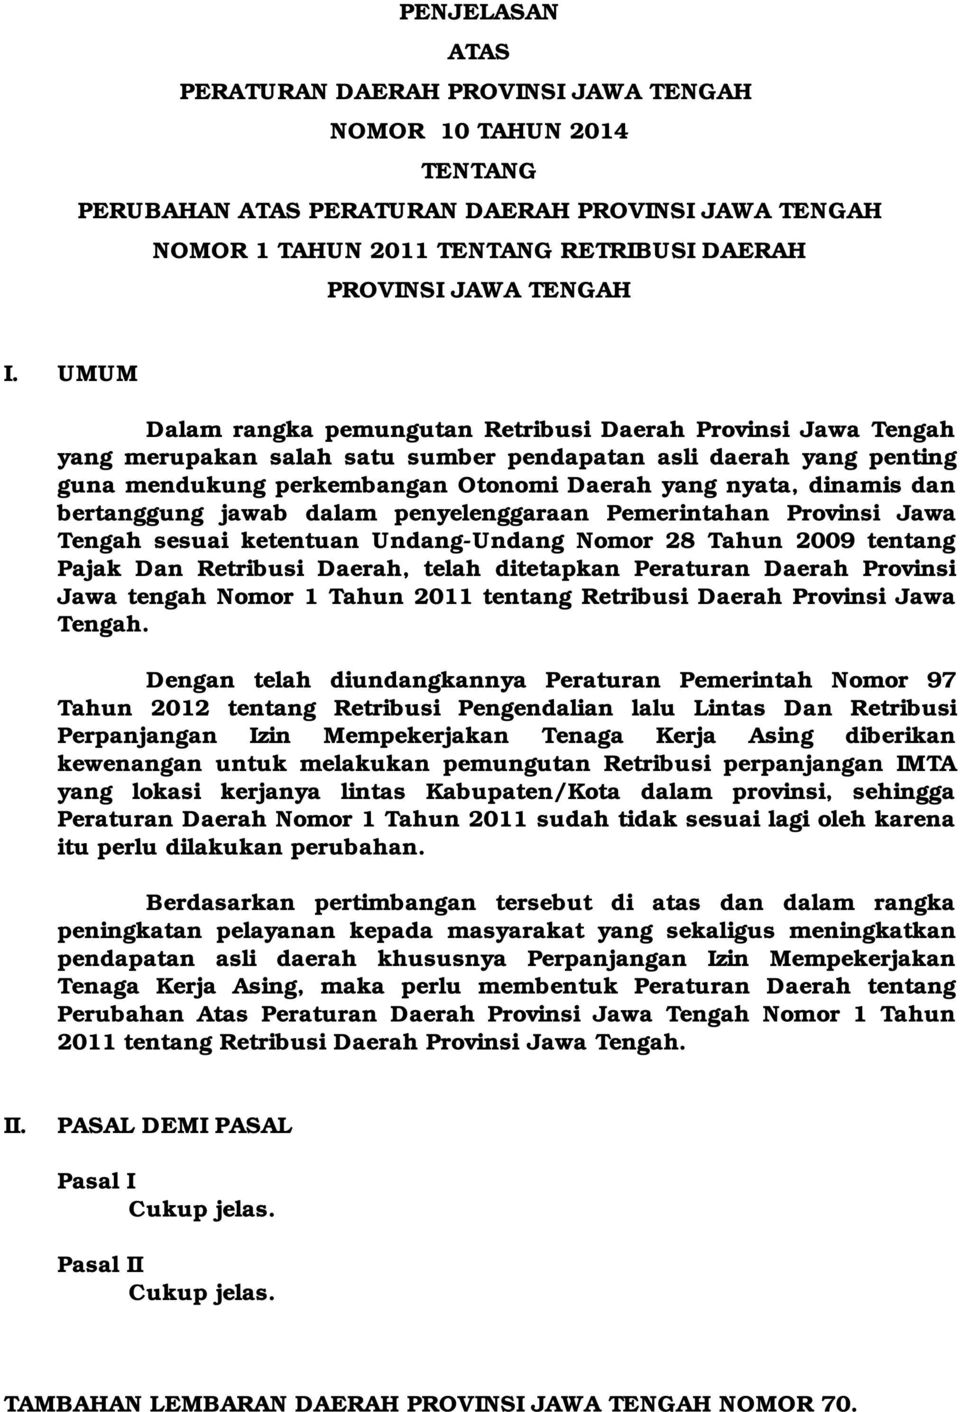 dinamis dan bertanggung jawab dalam penyelenggaraan Pemerintahan Provinsi Jawa Tengah sesuai ketentuan Undang-Undang Nomor 28 Tahun 2009 tentang Pajak Dan Retribusi Daerah, telah ditetapkan Peraturan